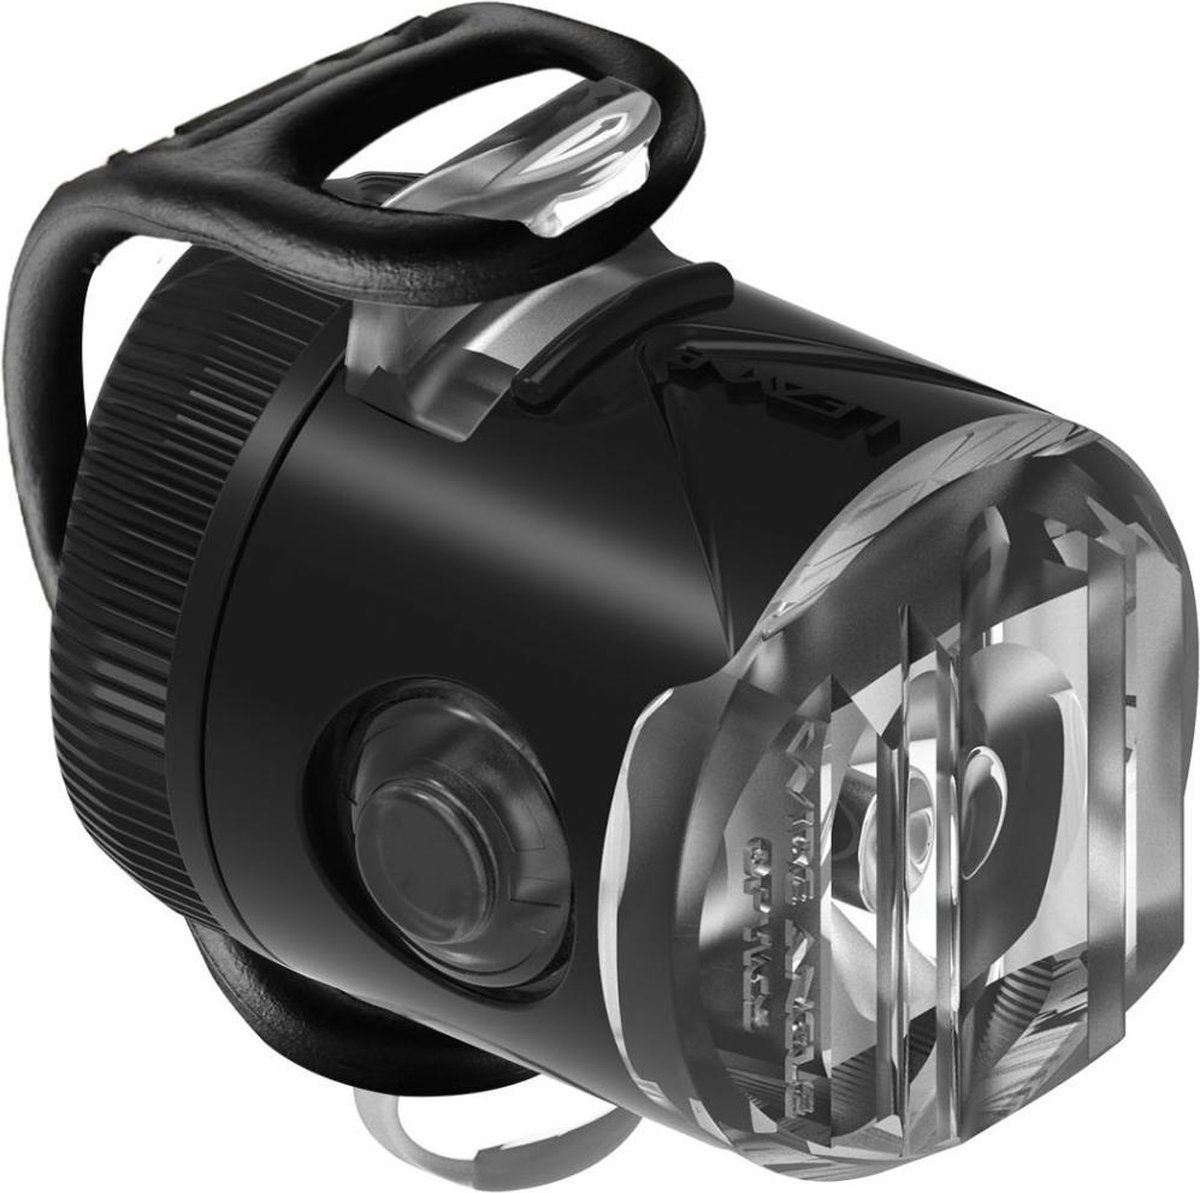 Lezyne Femto USB Drive Front Koplamp – Fietslamp – Fiets koplamp – Fiets verlichting – Veiligheidslampje – 4 knipperstanden – 15 lumen – Zwart